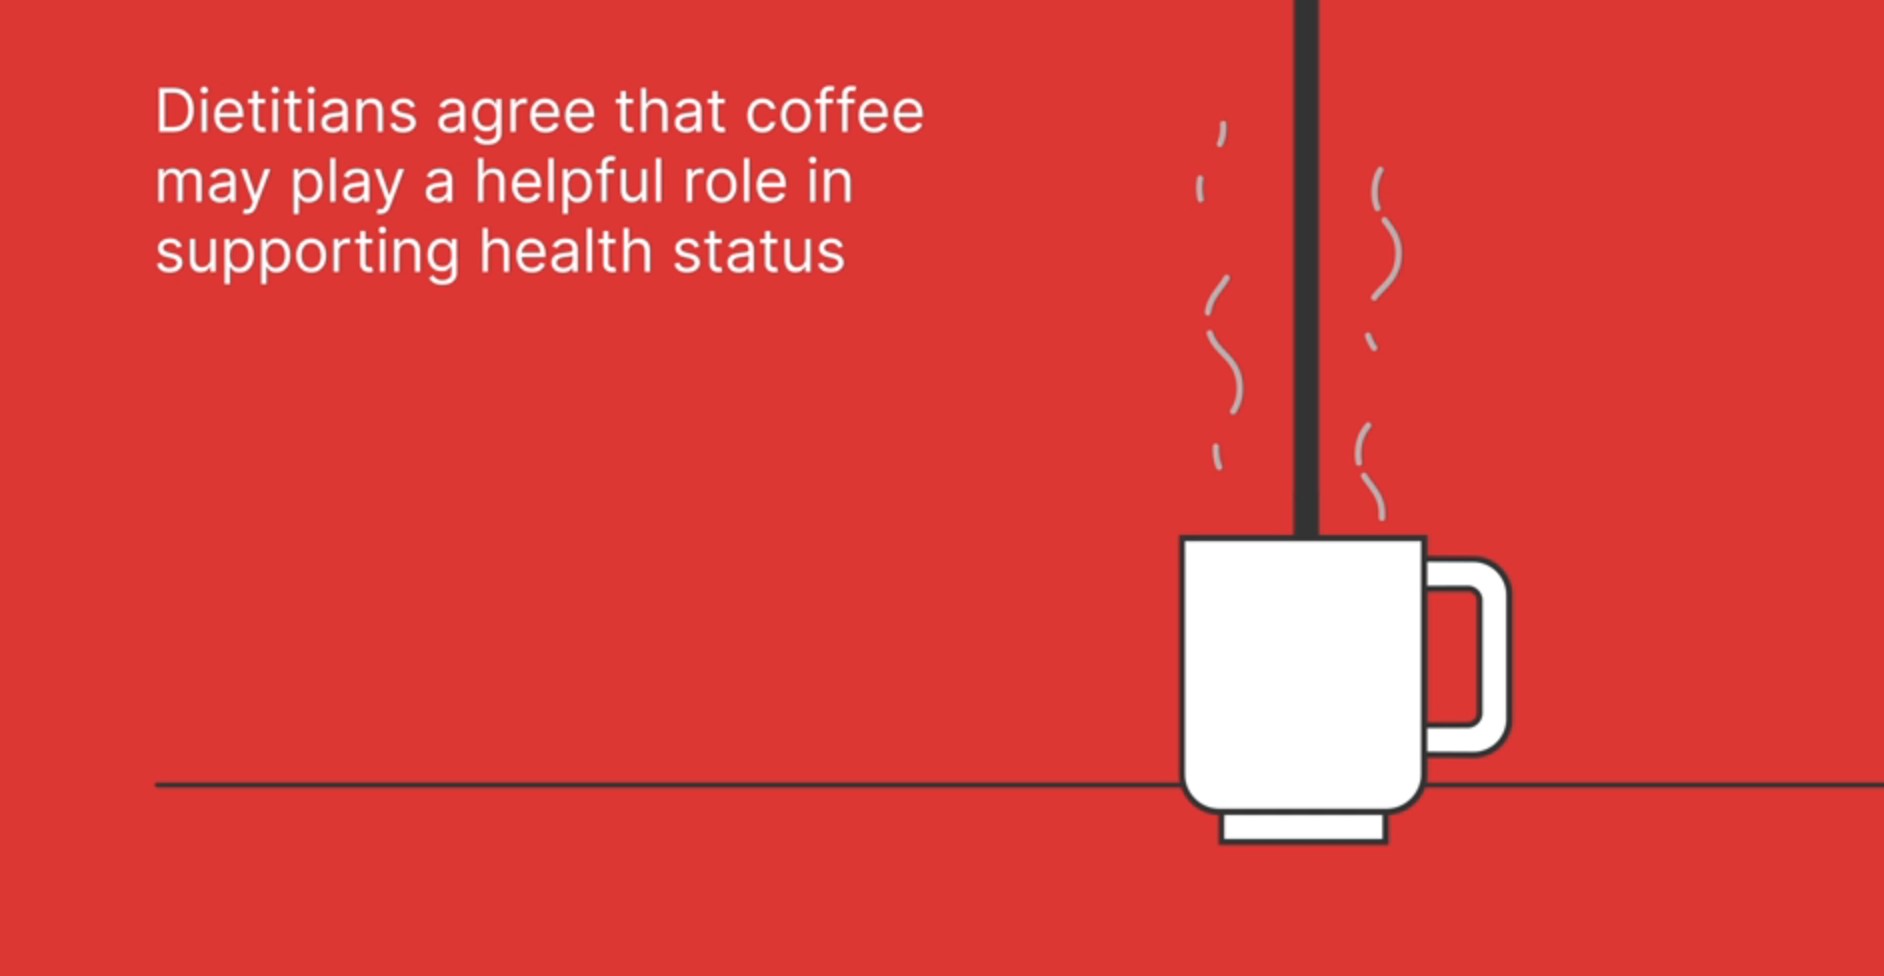 New survey reveals European dietitians' perspectives on coffee consumption